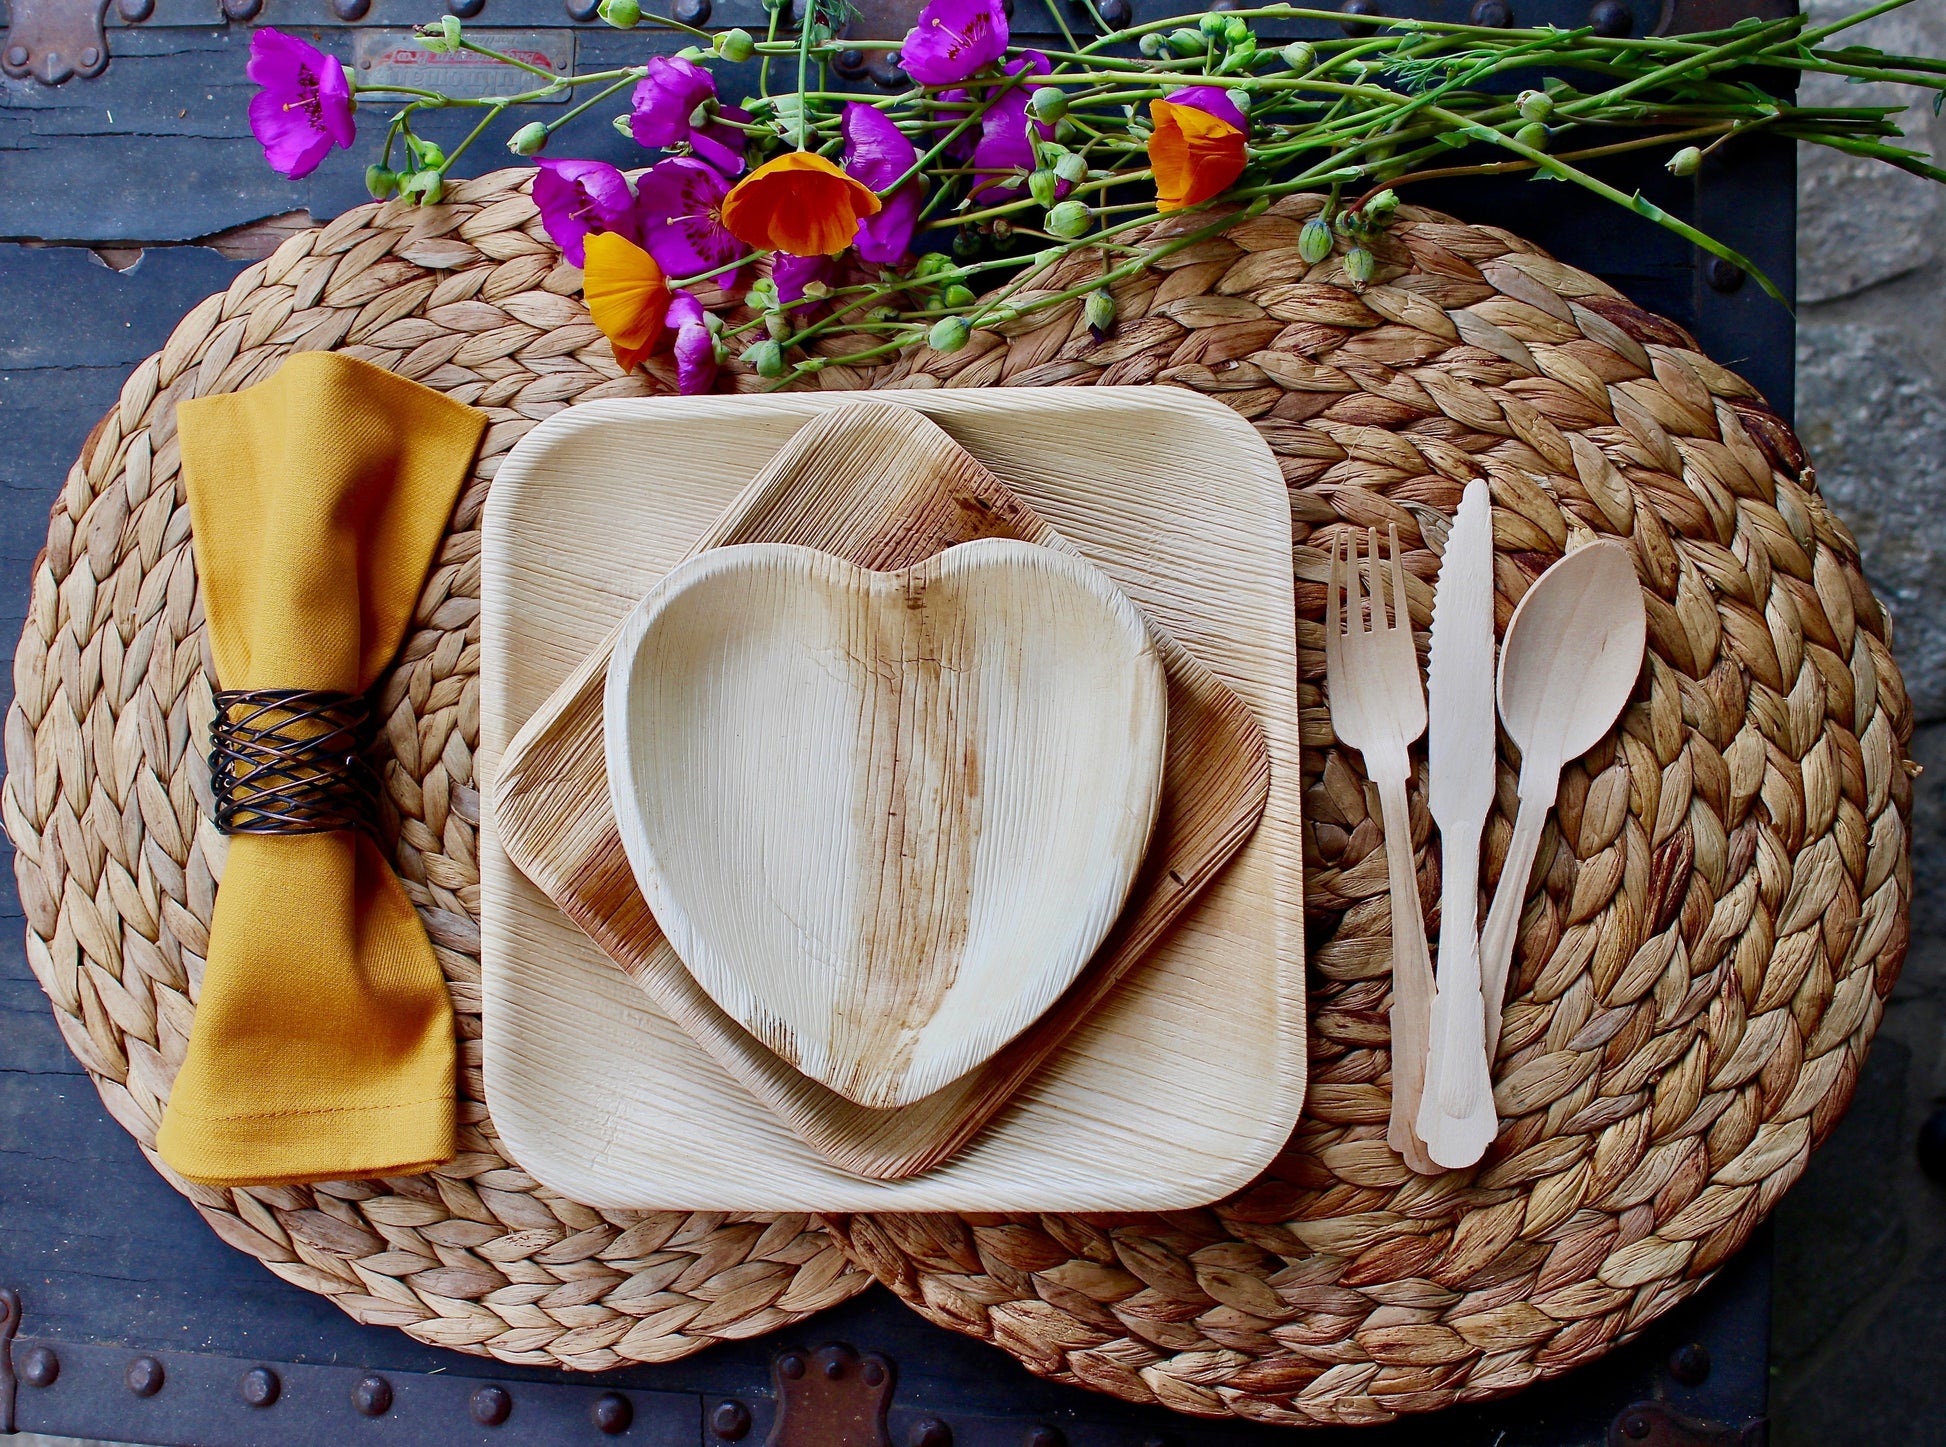 Palm Leaf Plate - Sea Grape Plate - Coconut Bowl - Wooden Birch Cutlery